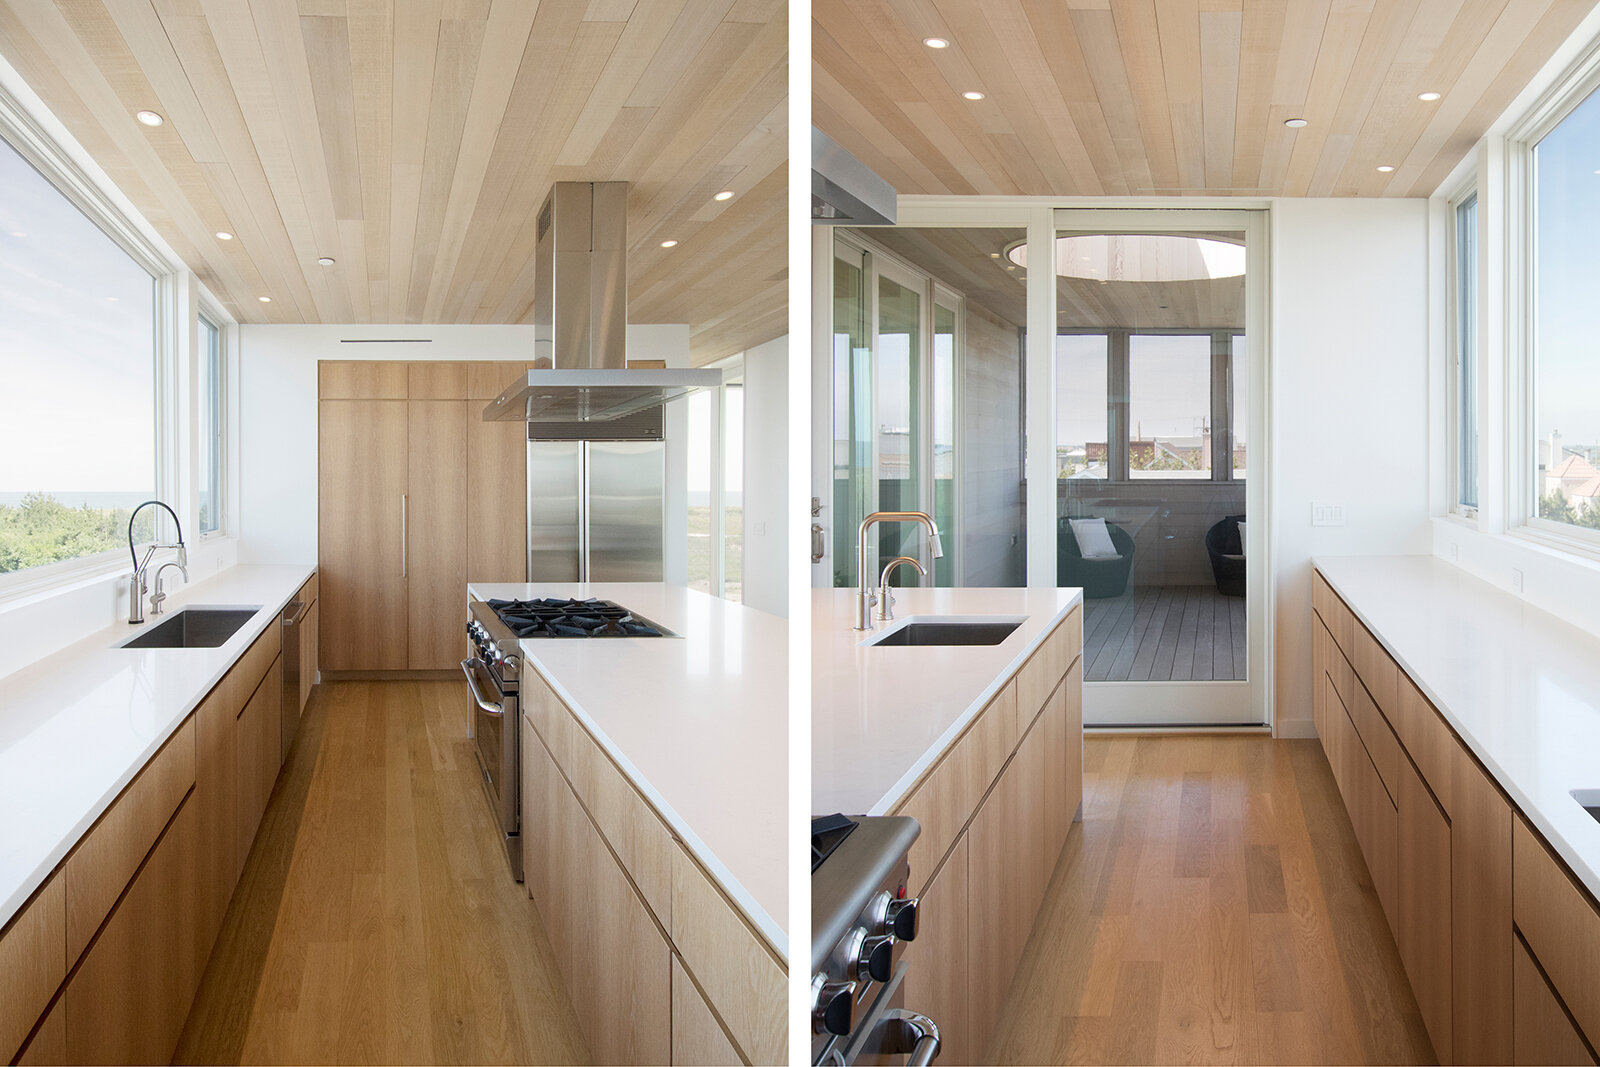 17-res4-resolution-4-architecture-modern-modular-house-prefab-home-lido-beach-house-2-long-island-ny-interior-kitchen-kitchen.jpg